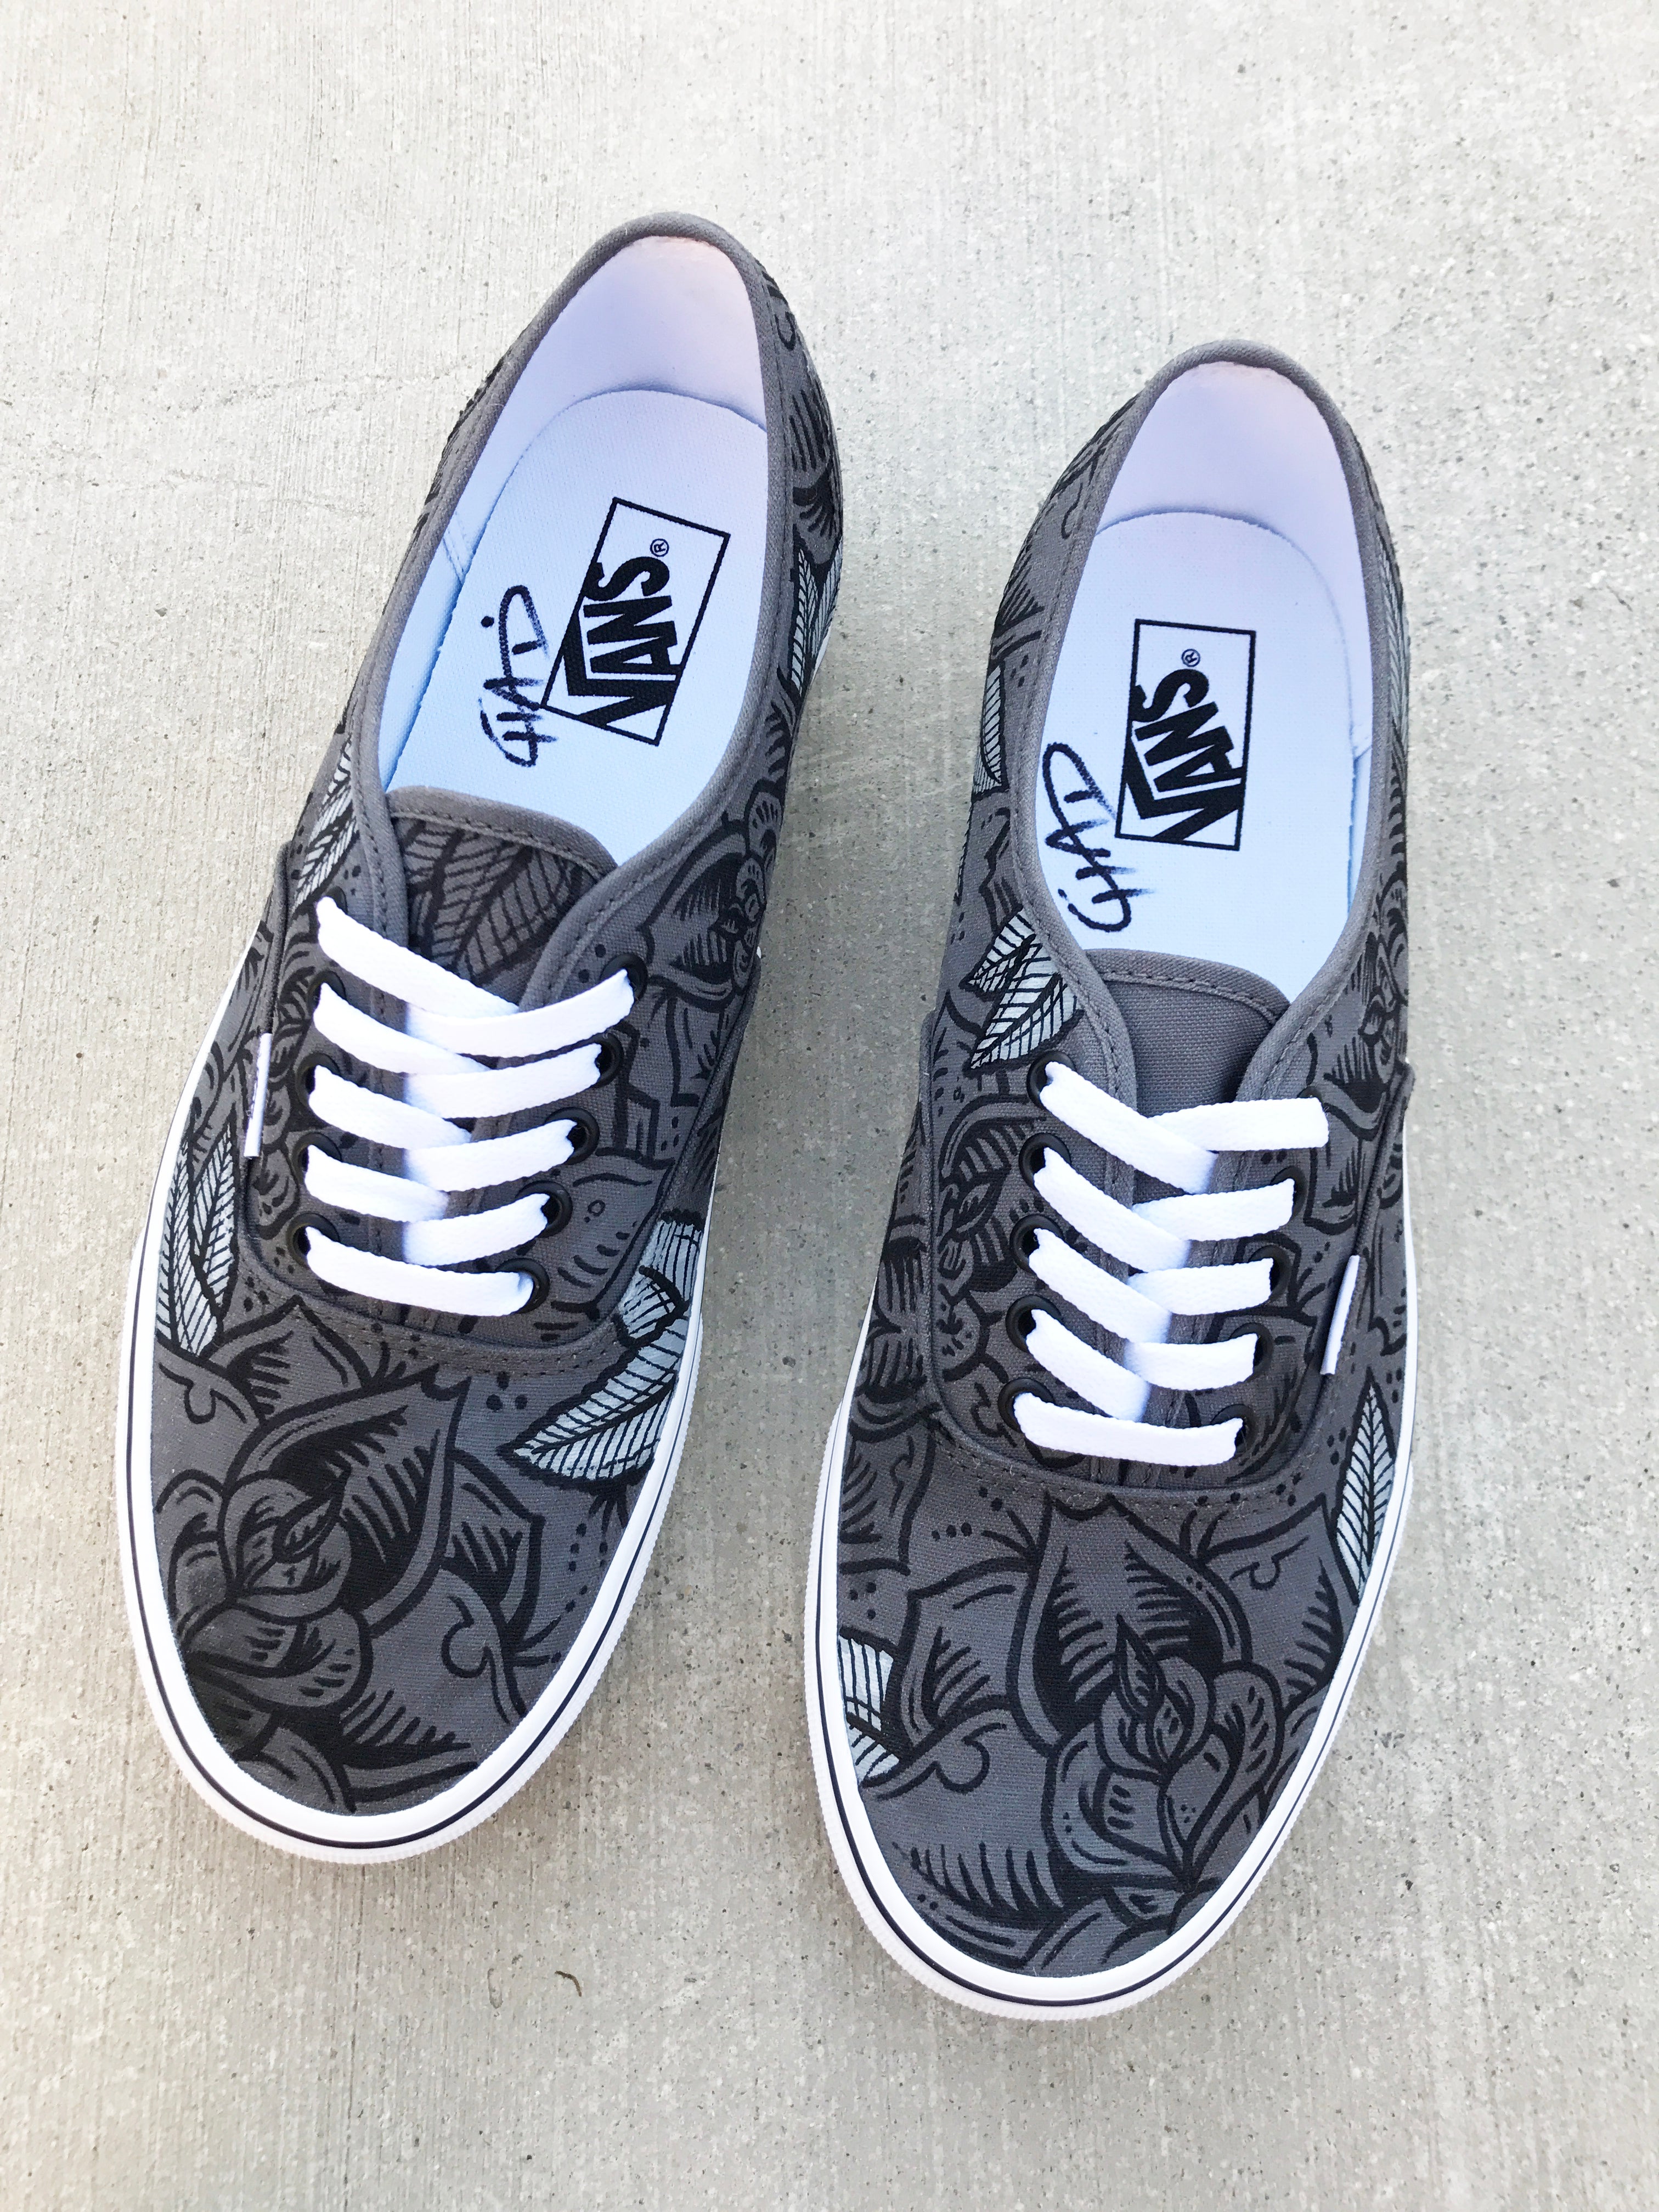 Dark Roses - Custom hand painted Vans Authentic shoes